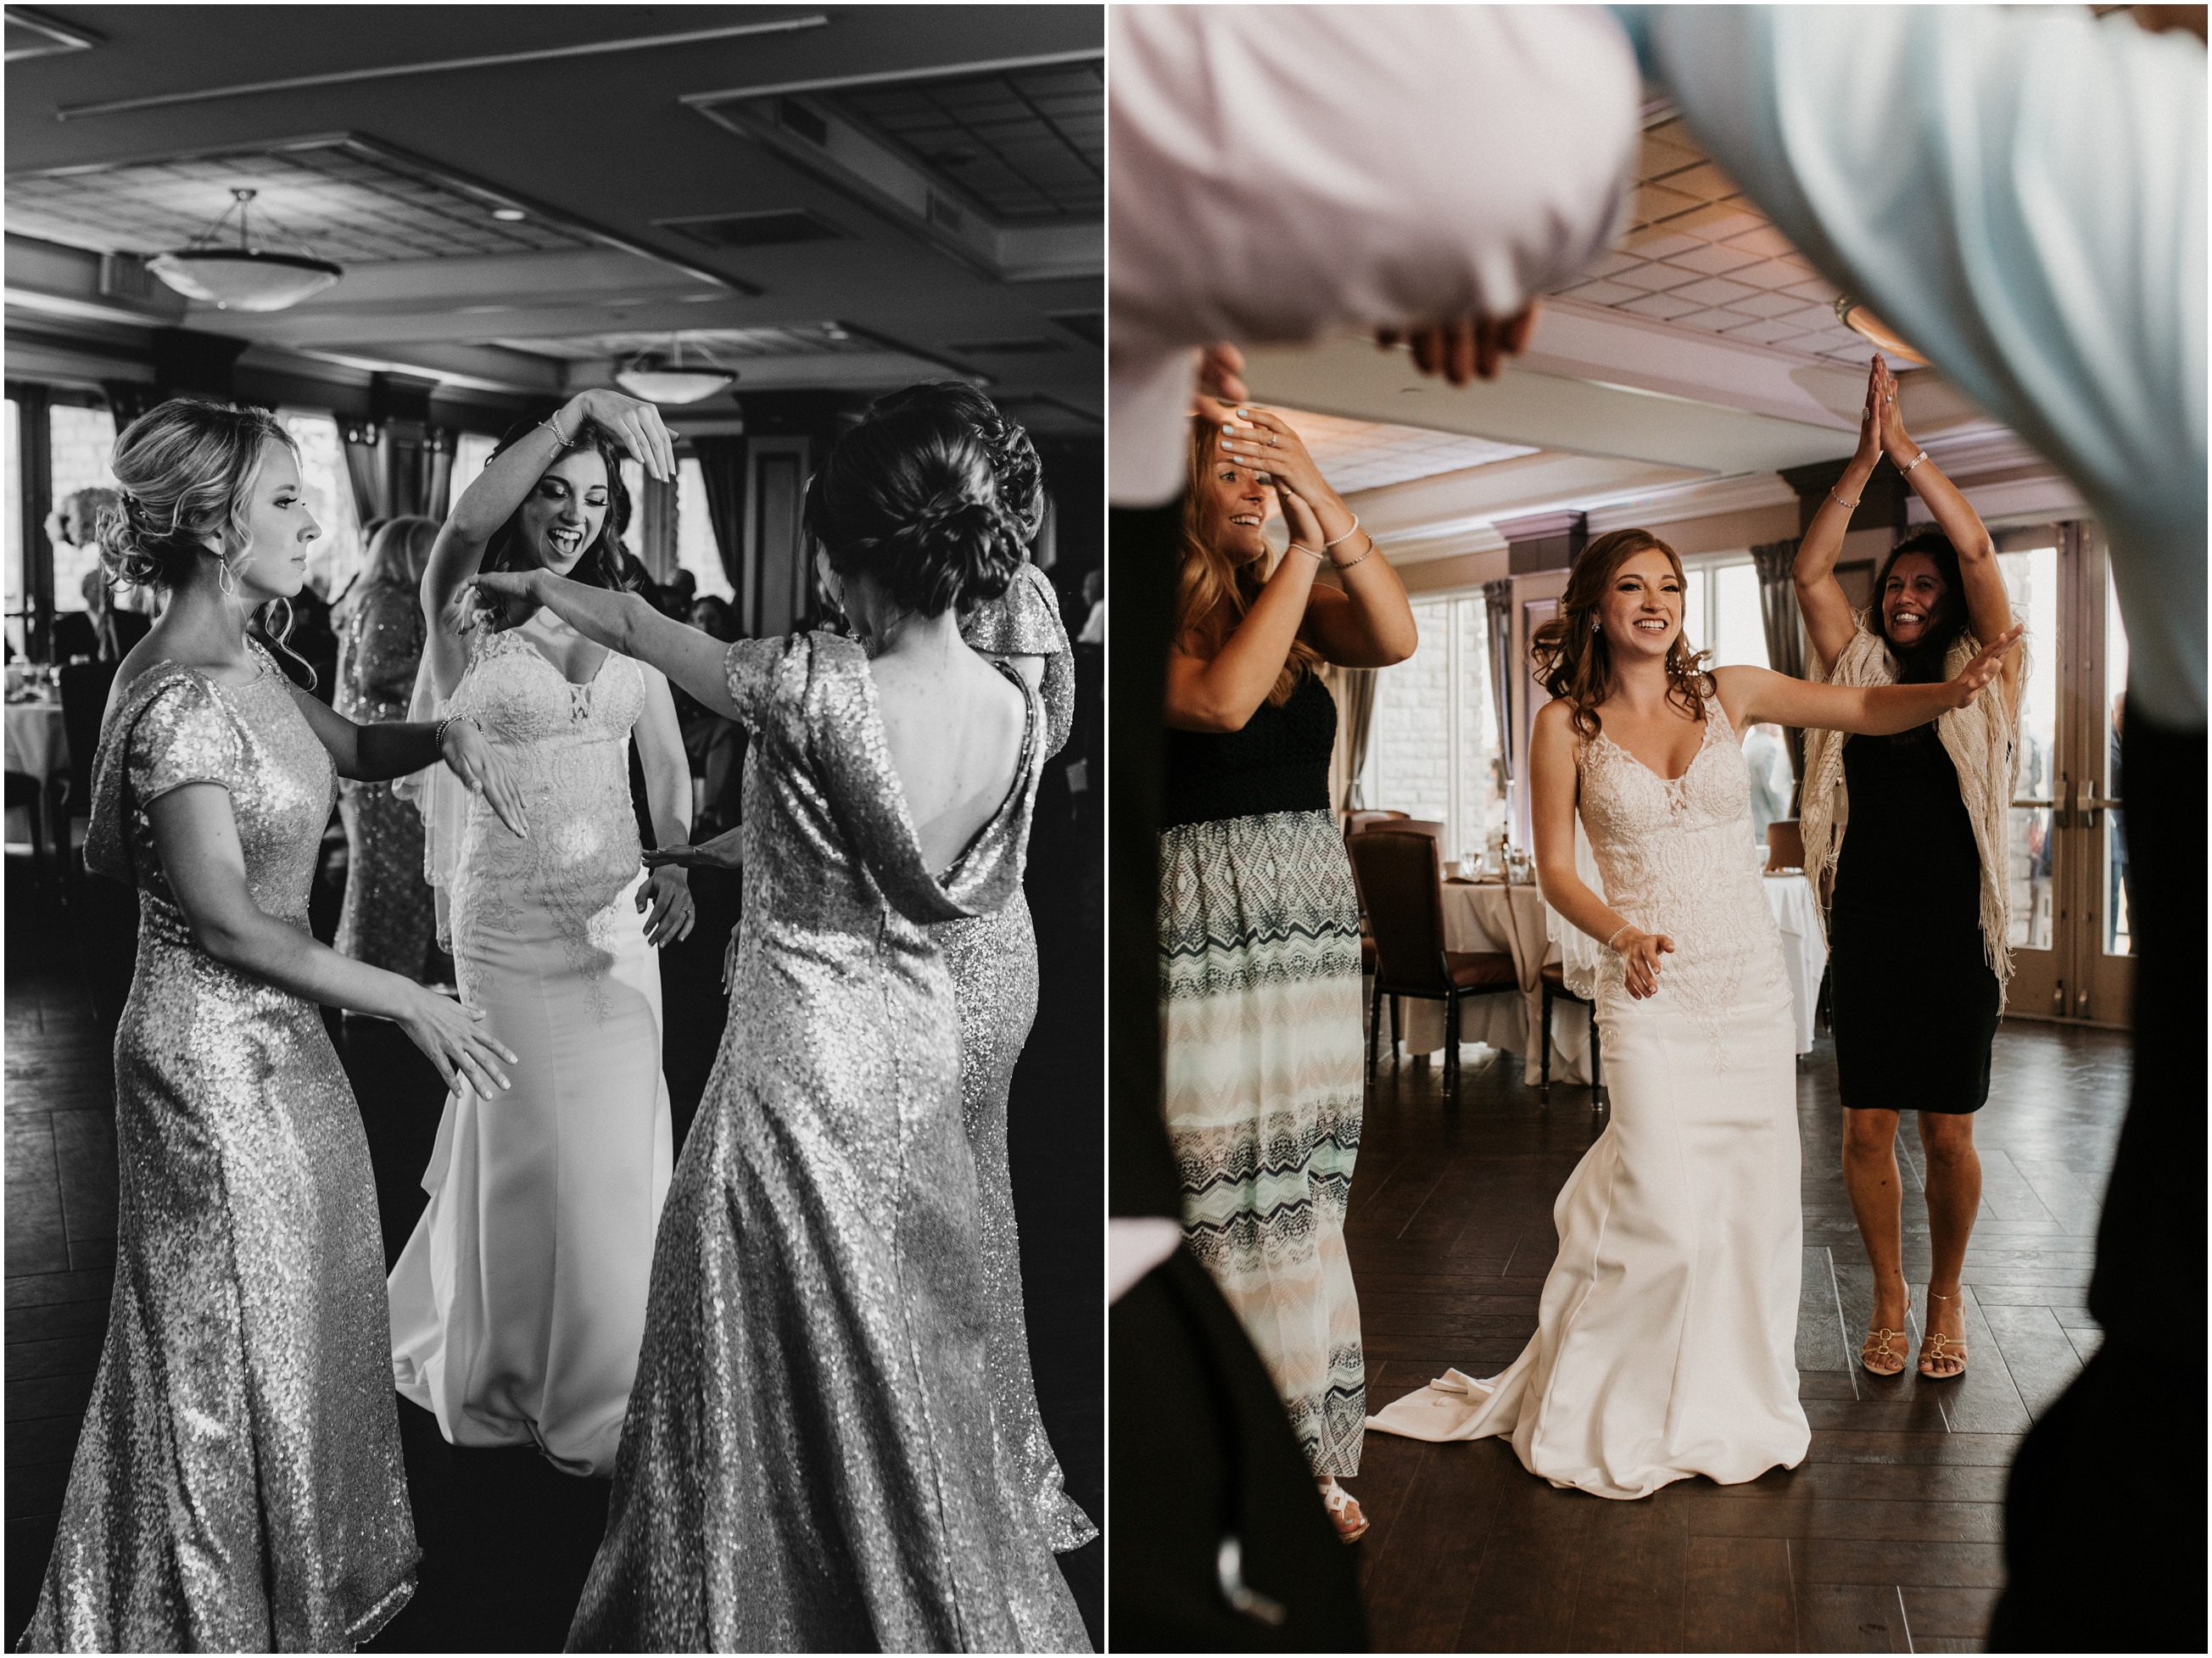 wedding reception guests dancing